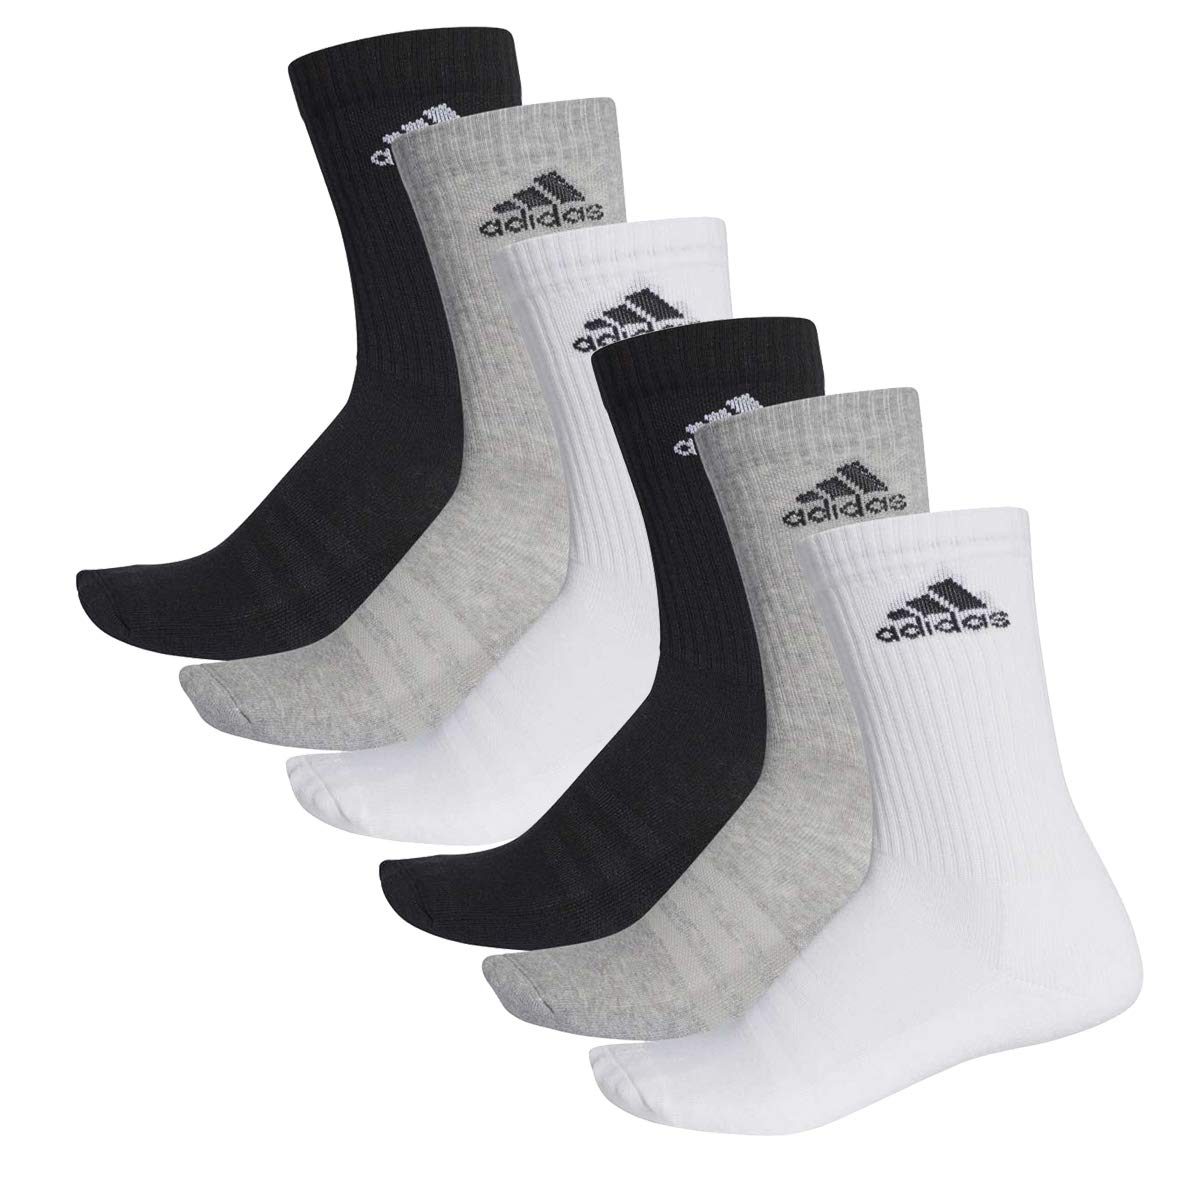 adidas CUSHIONED CREW Tennissocken Sportsocken Damen Herren Unisex 6 Paar, Farbe:032 - grey melange, Socken & Strümpfe:40-42